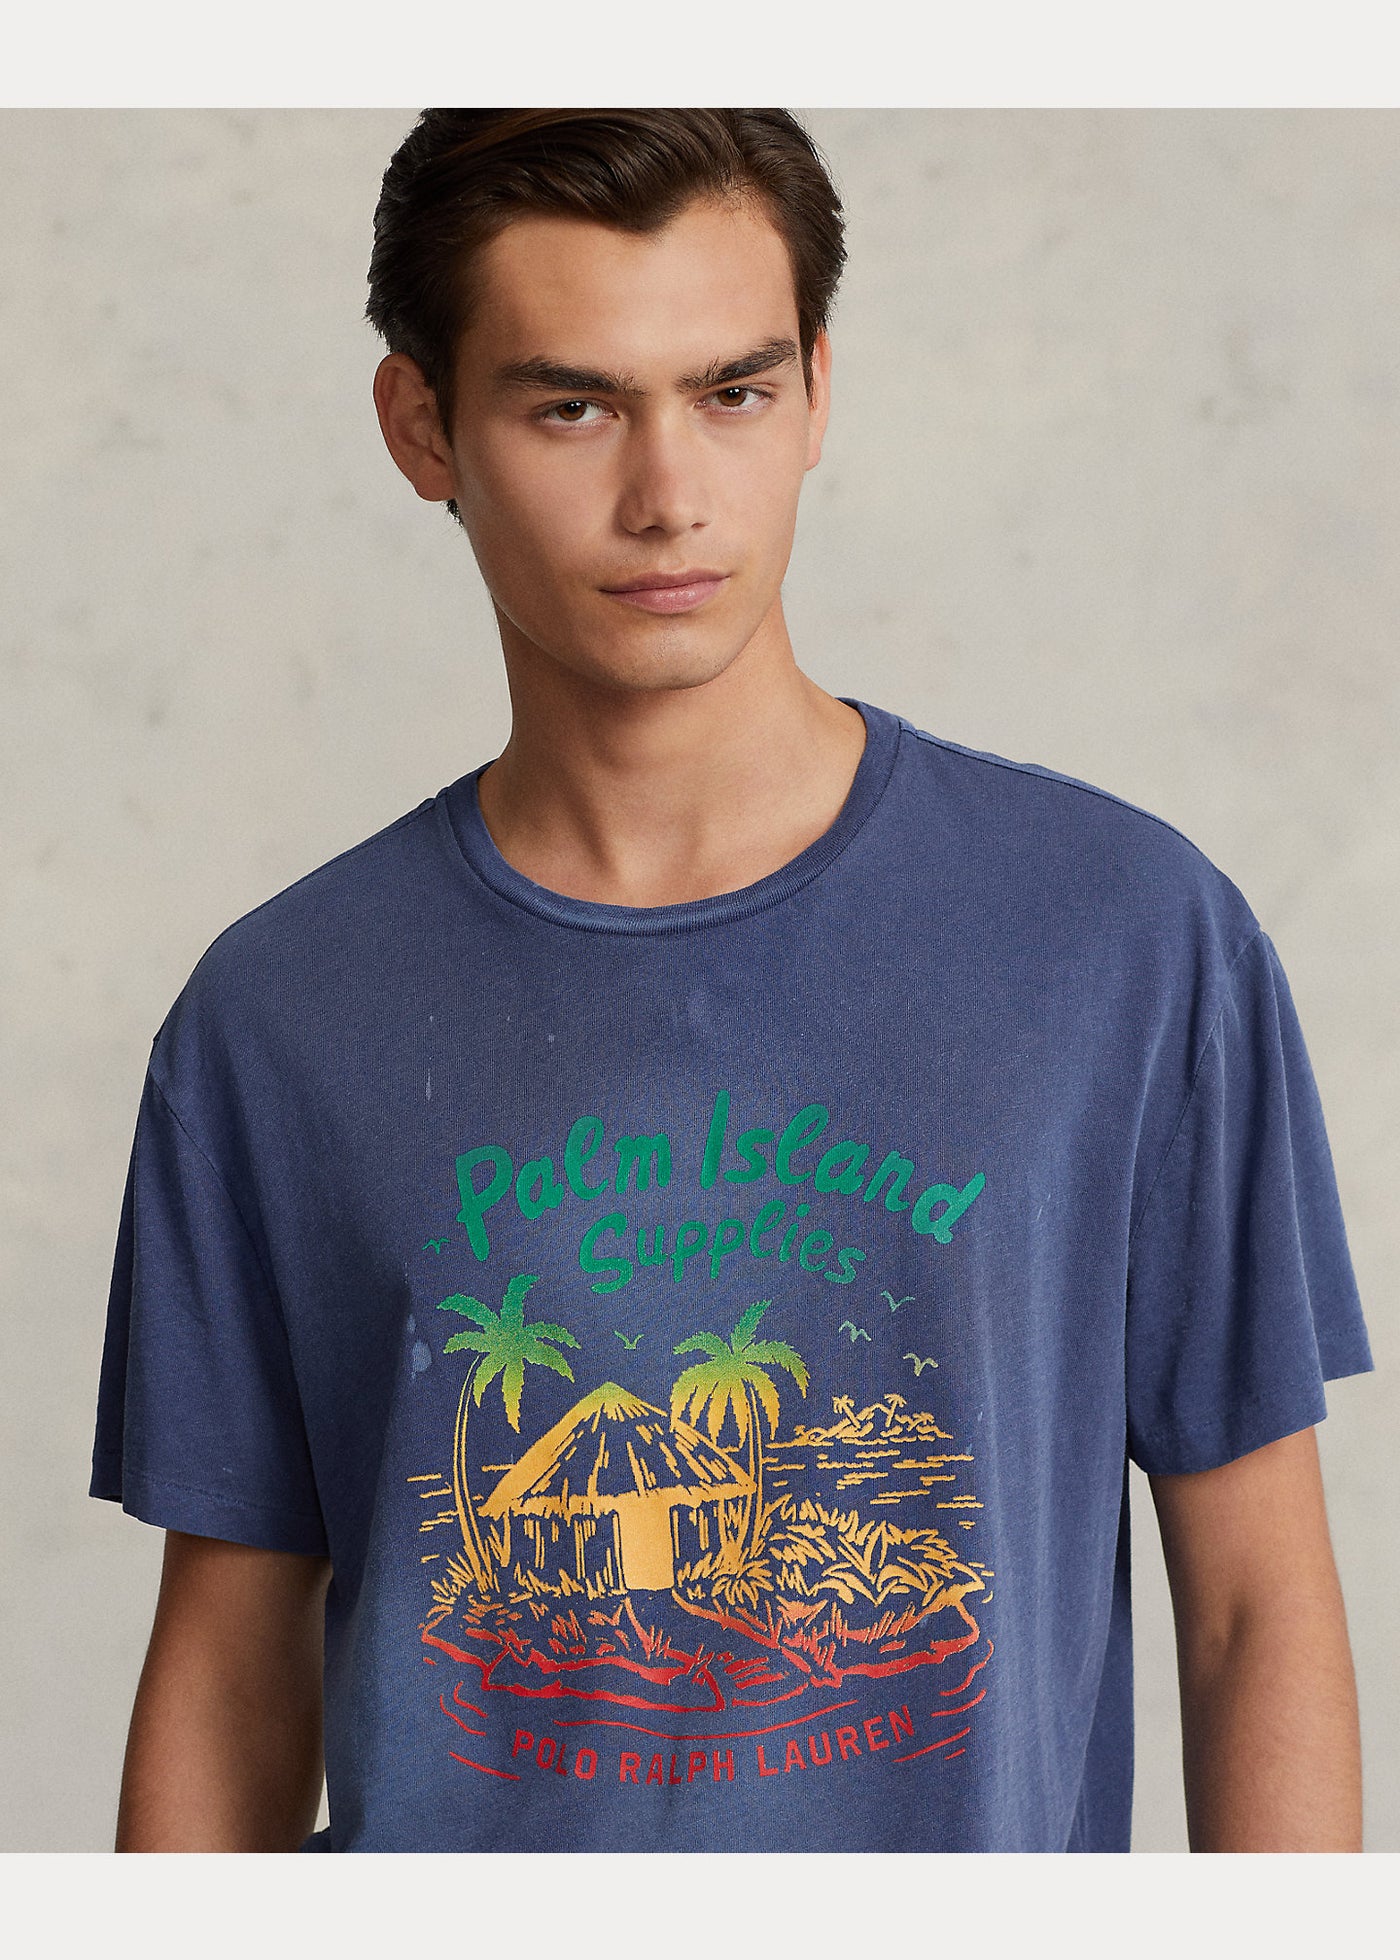 Ralph Lauren Classic Fit Slub Jersey Graphic T-Shirt | Old Royal